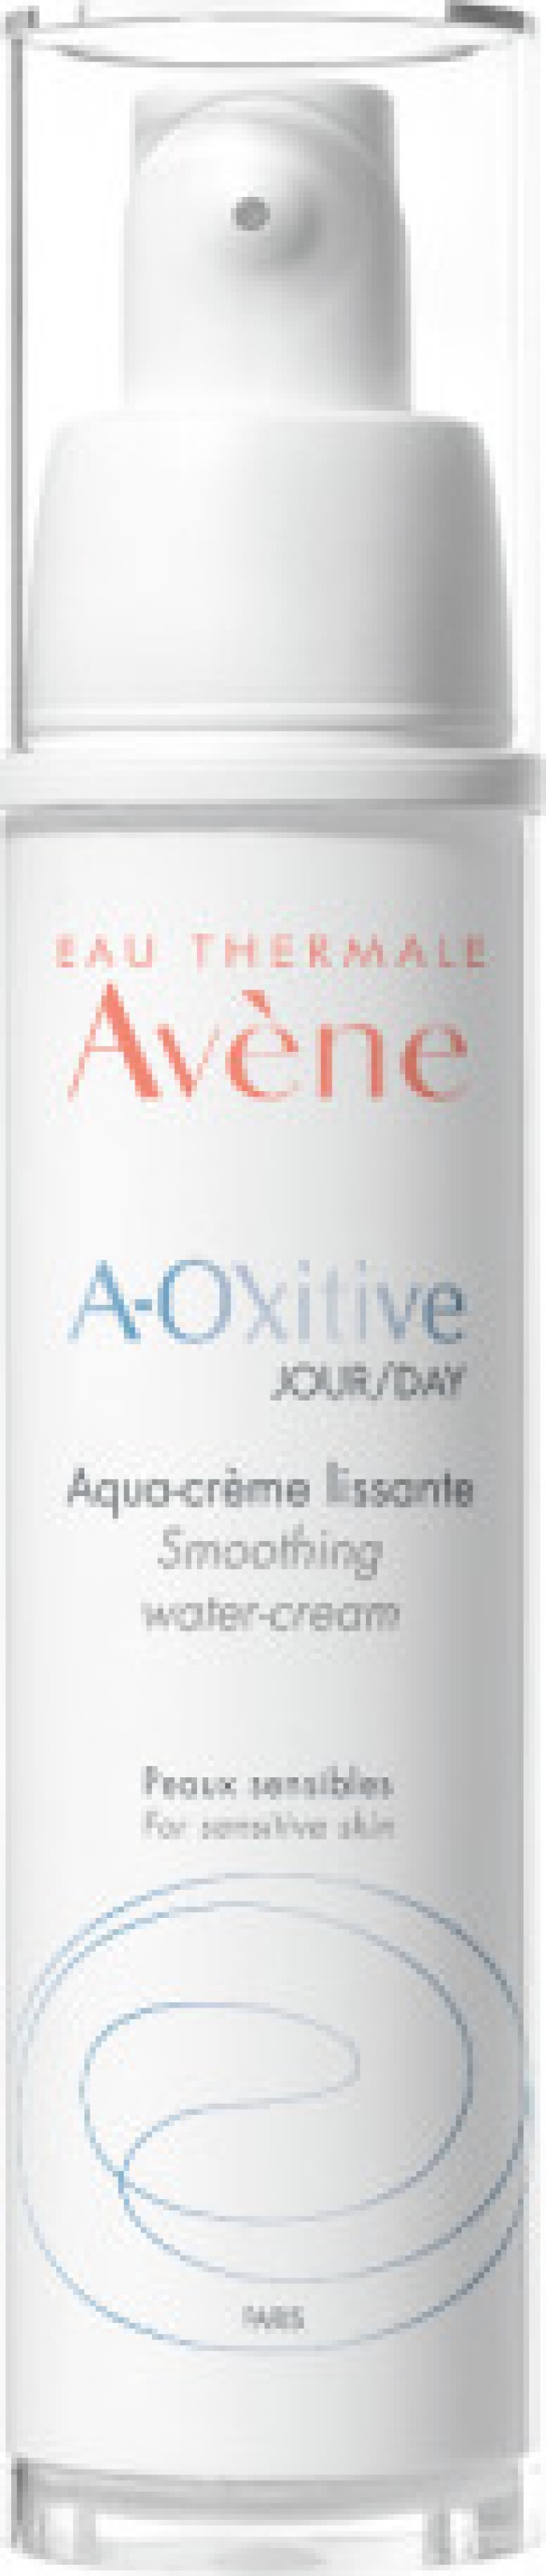 Avene A-Oxitive Smoothing Water Cream 30ml Λειαντική Κρέμα Ημέρας για τις Πρώτες Ρυτίδες